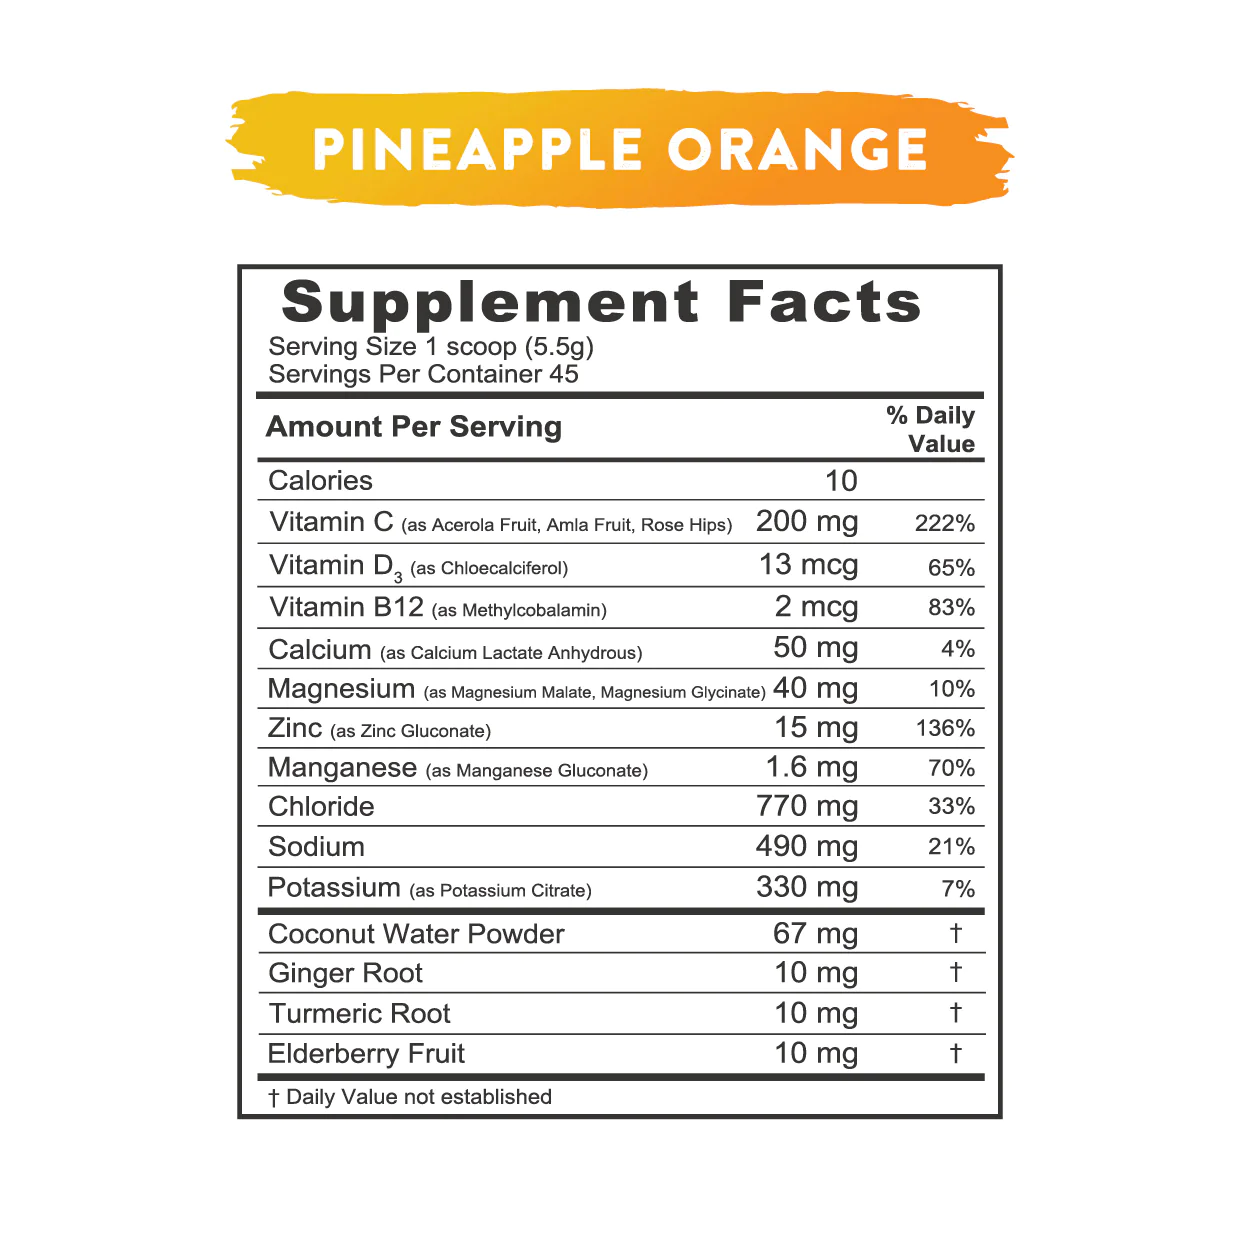 Relyte Immunity Pineapple Orange ingredients.